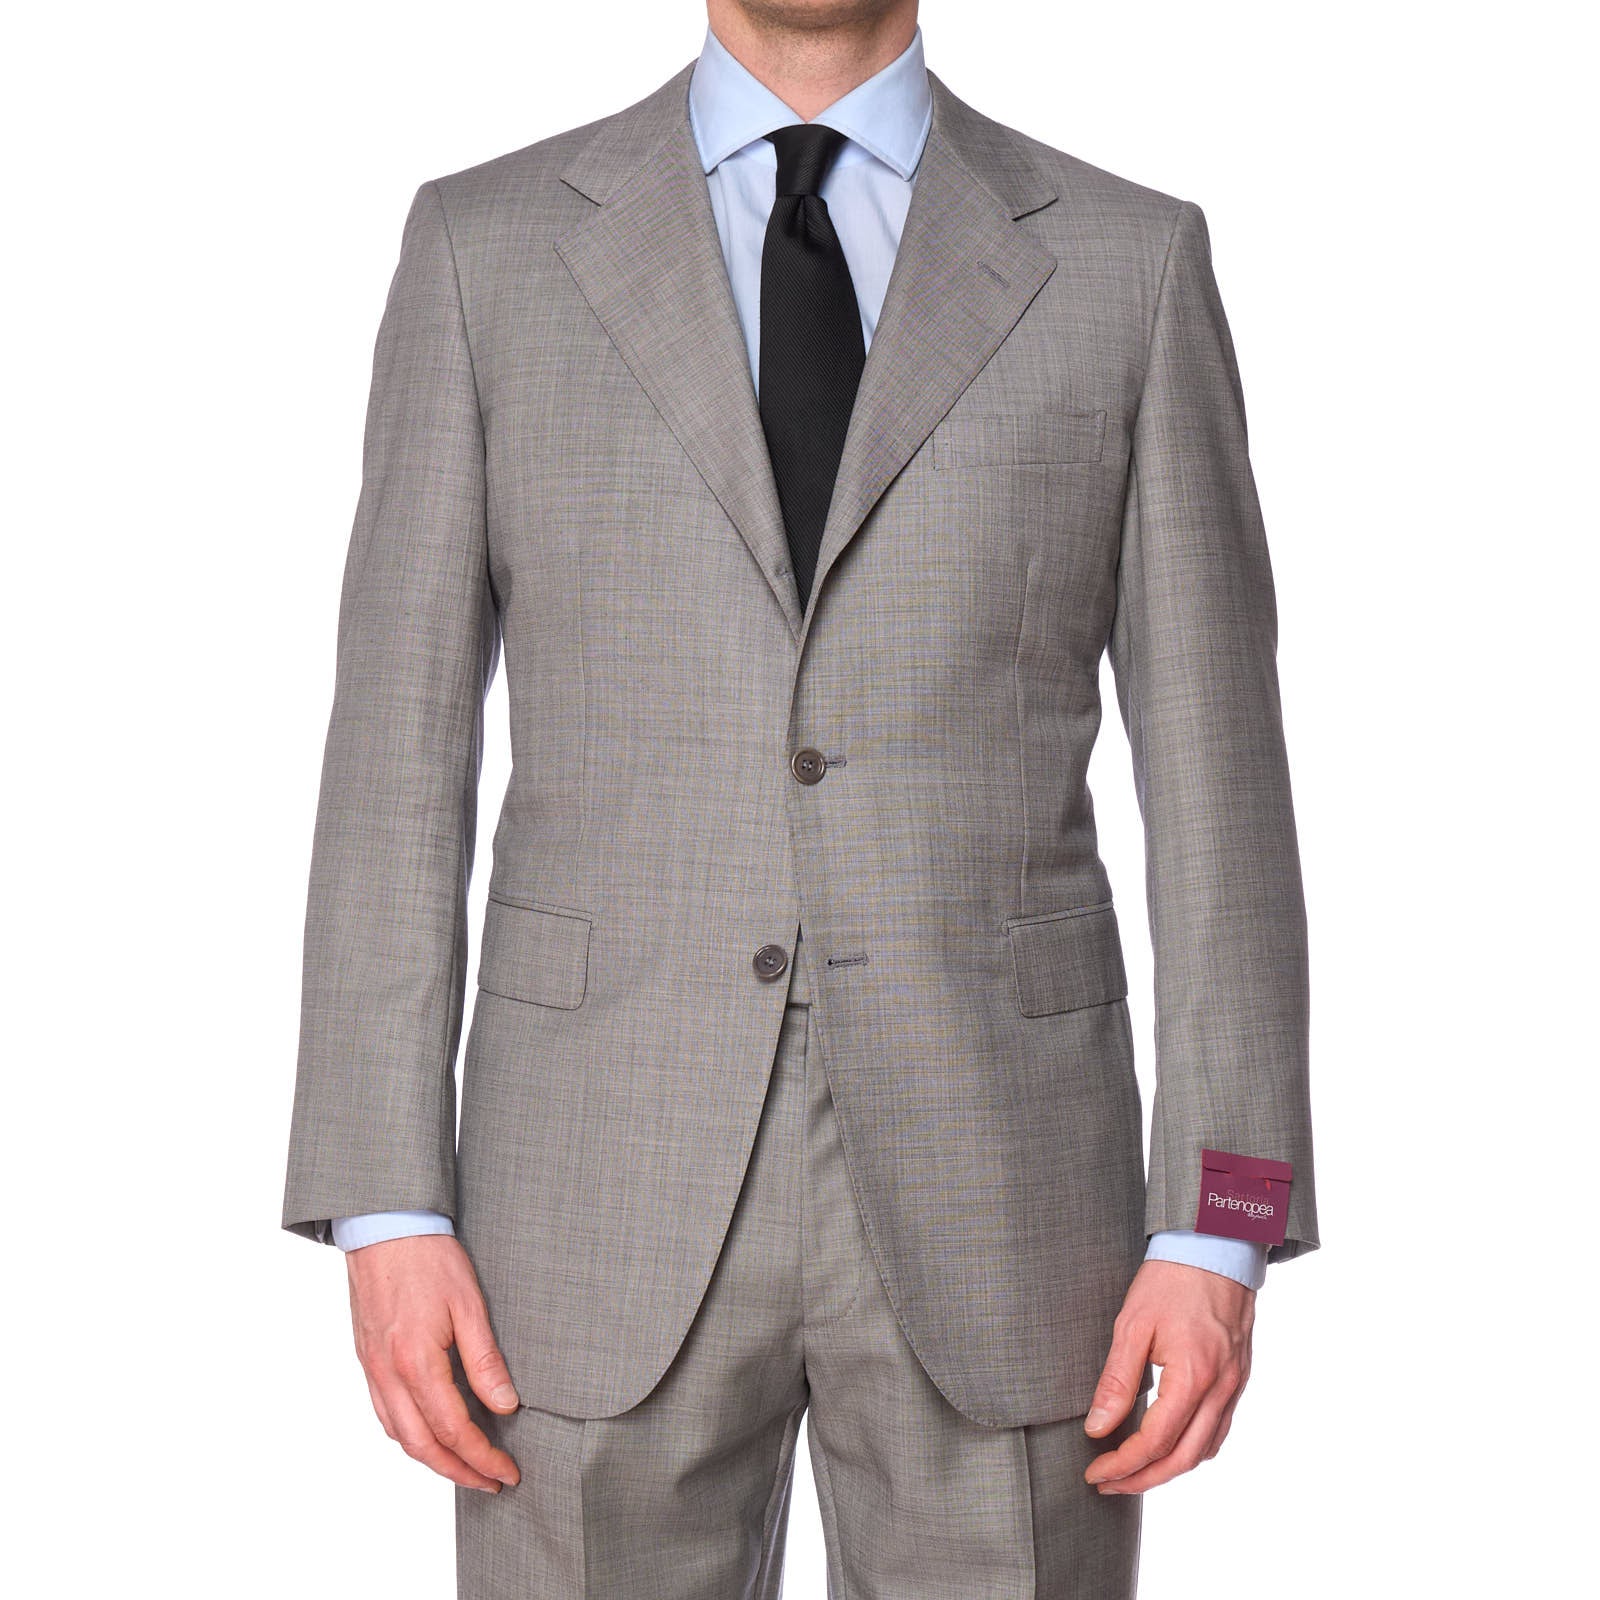 SARTORIA PARTENOPEA for VANNUCCI Handmade 120's Suit EU 52 NEW US 42